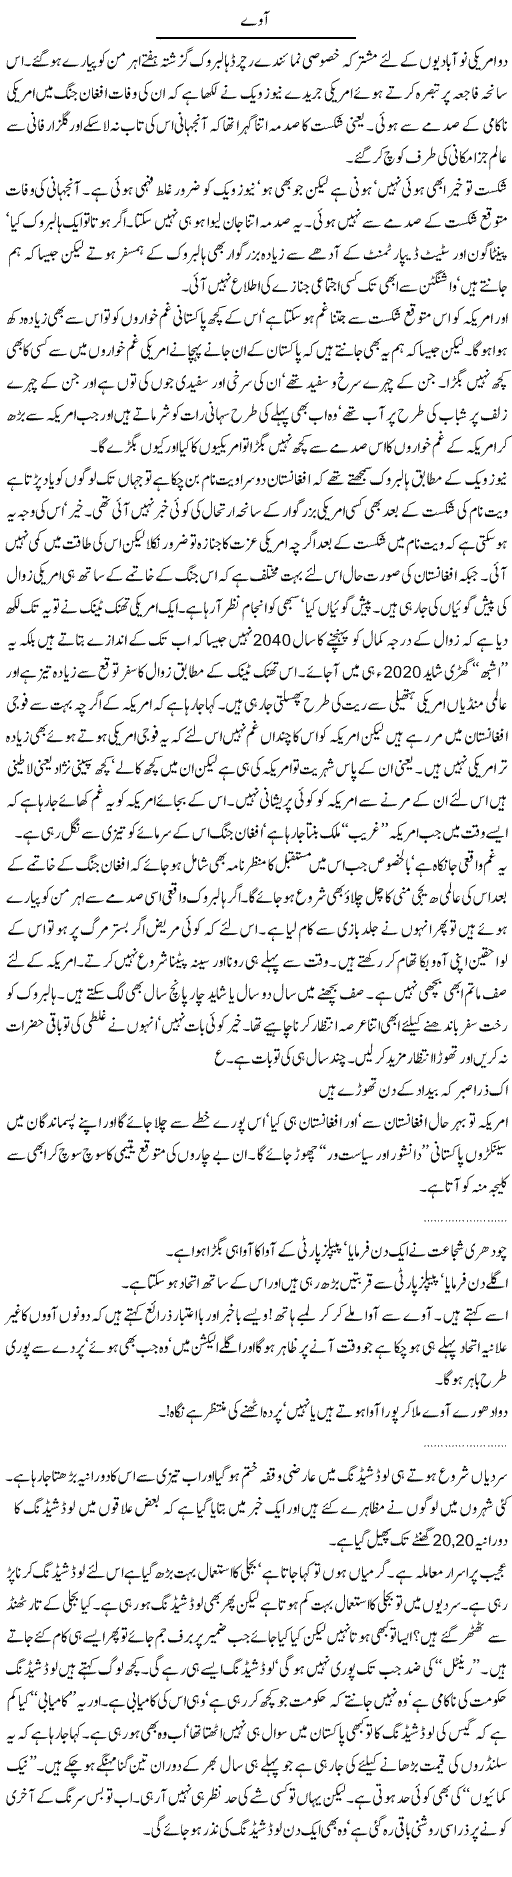 Come Express Column Abdullah Tariq 28 December 2010